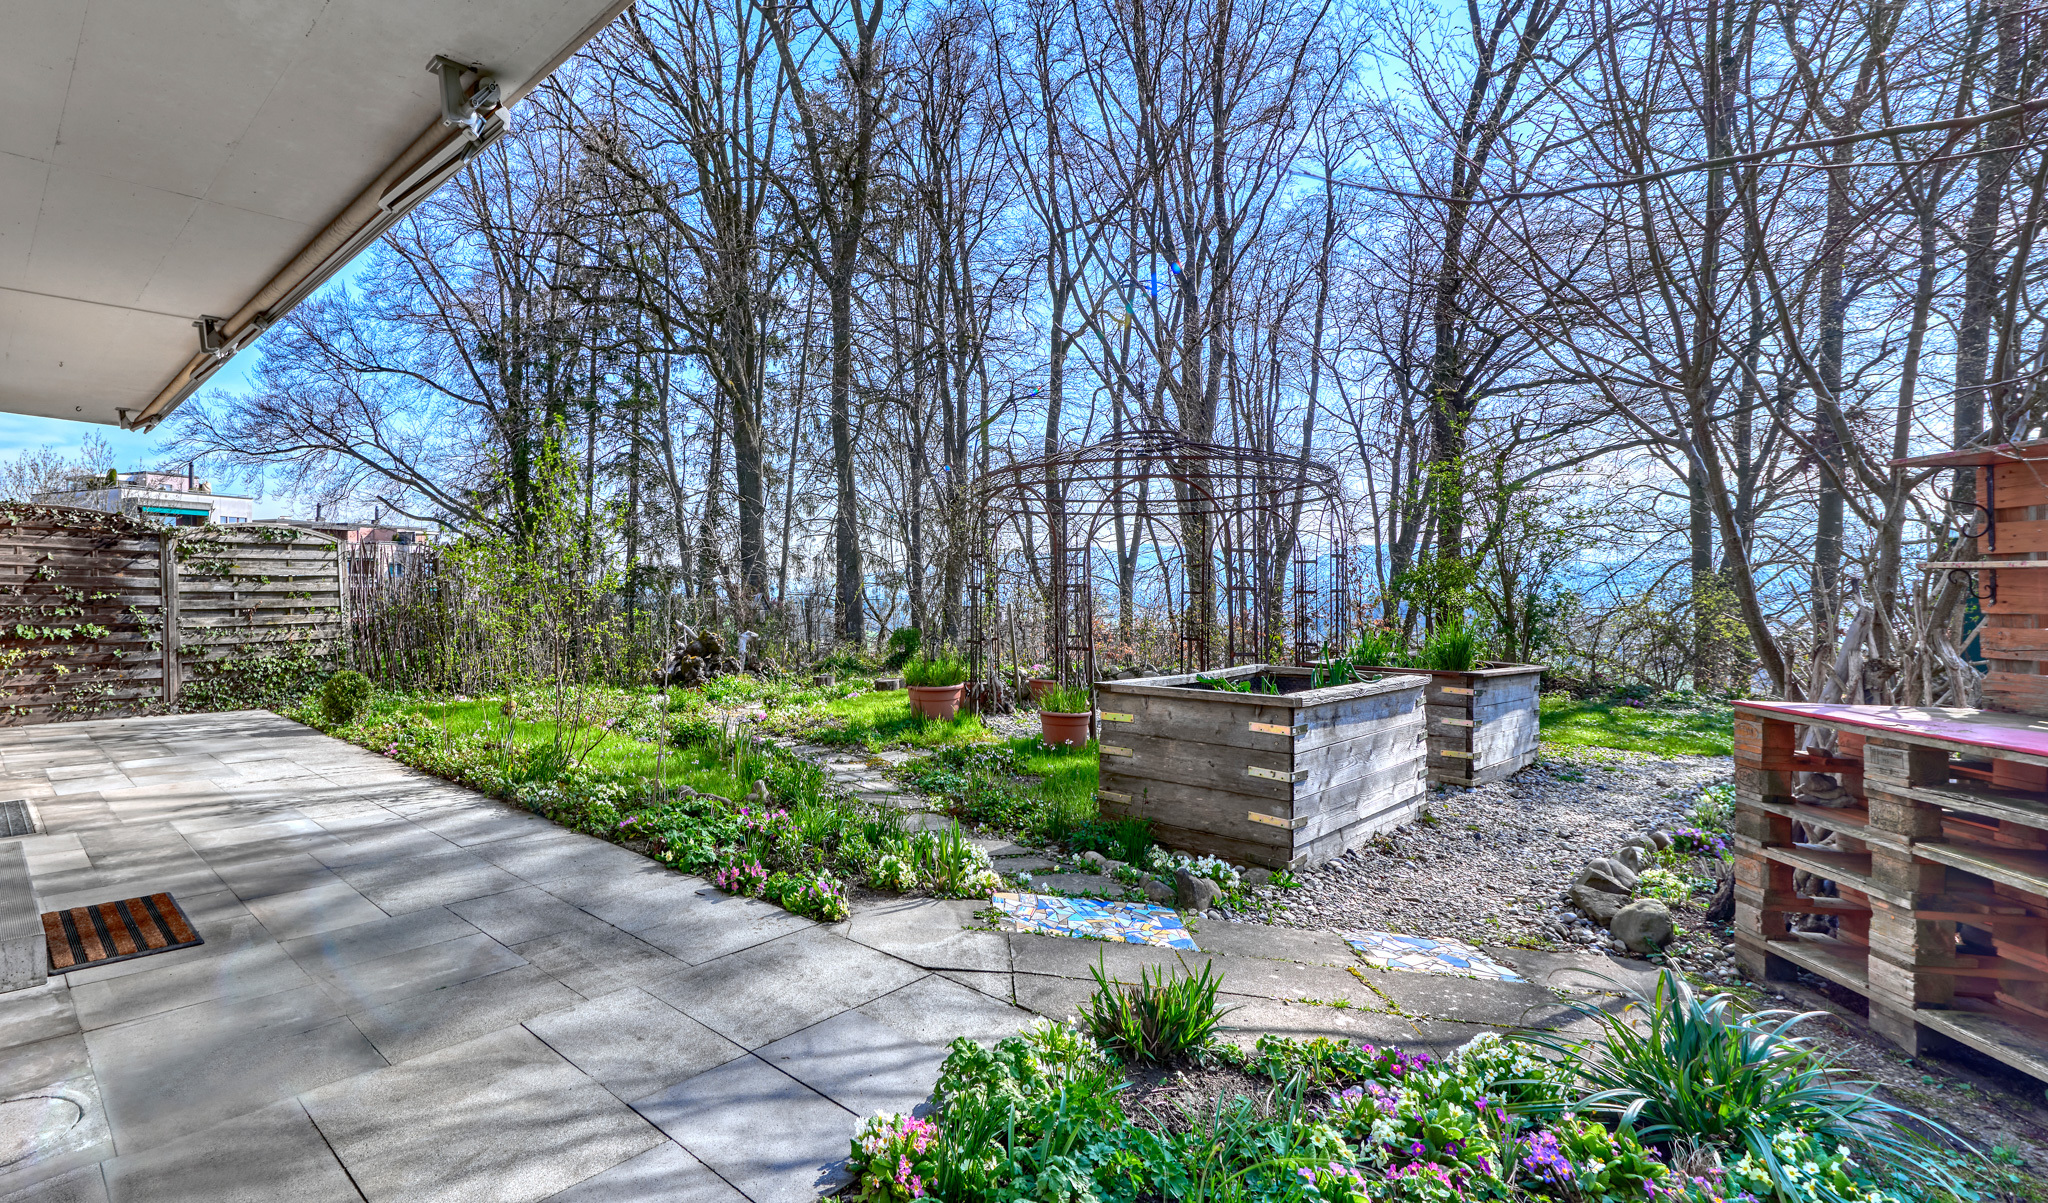 Doppel-Einfamilienhaus mit prämiertem Naturgarten als Familienoase